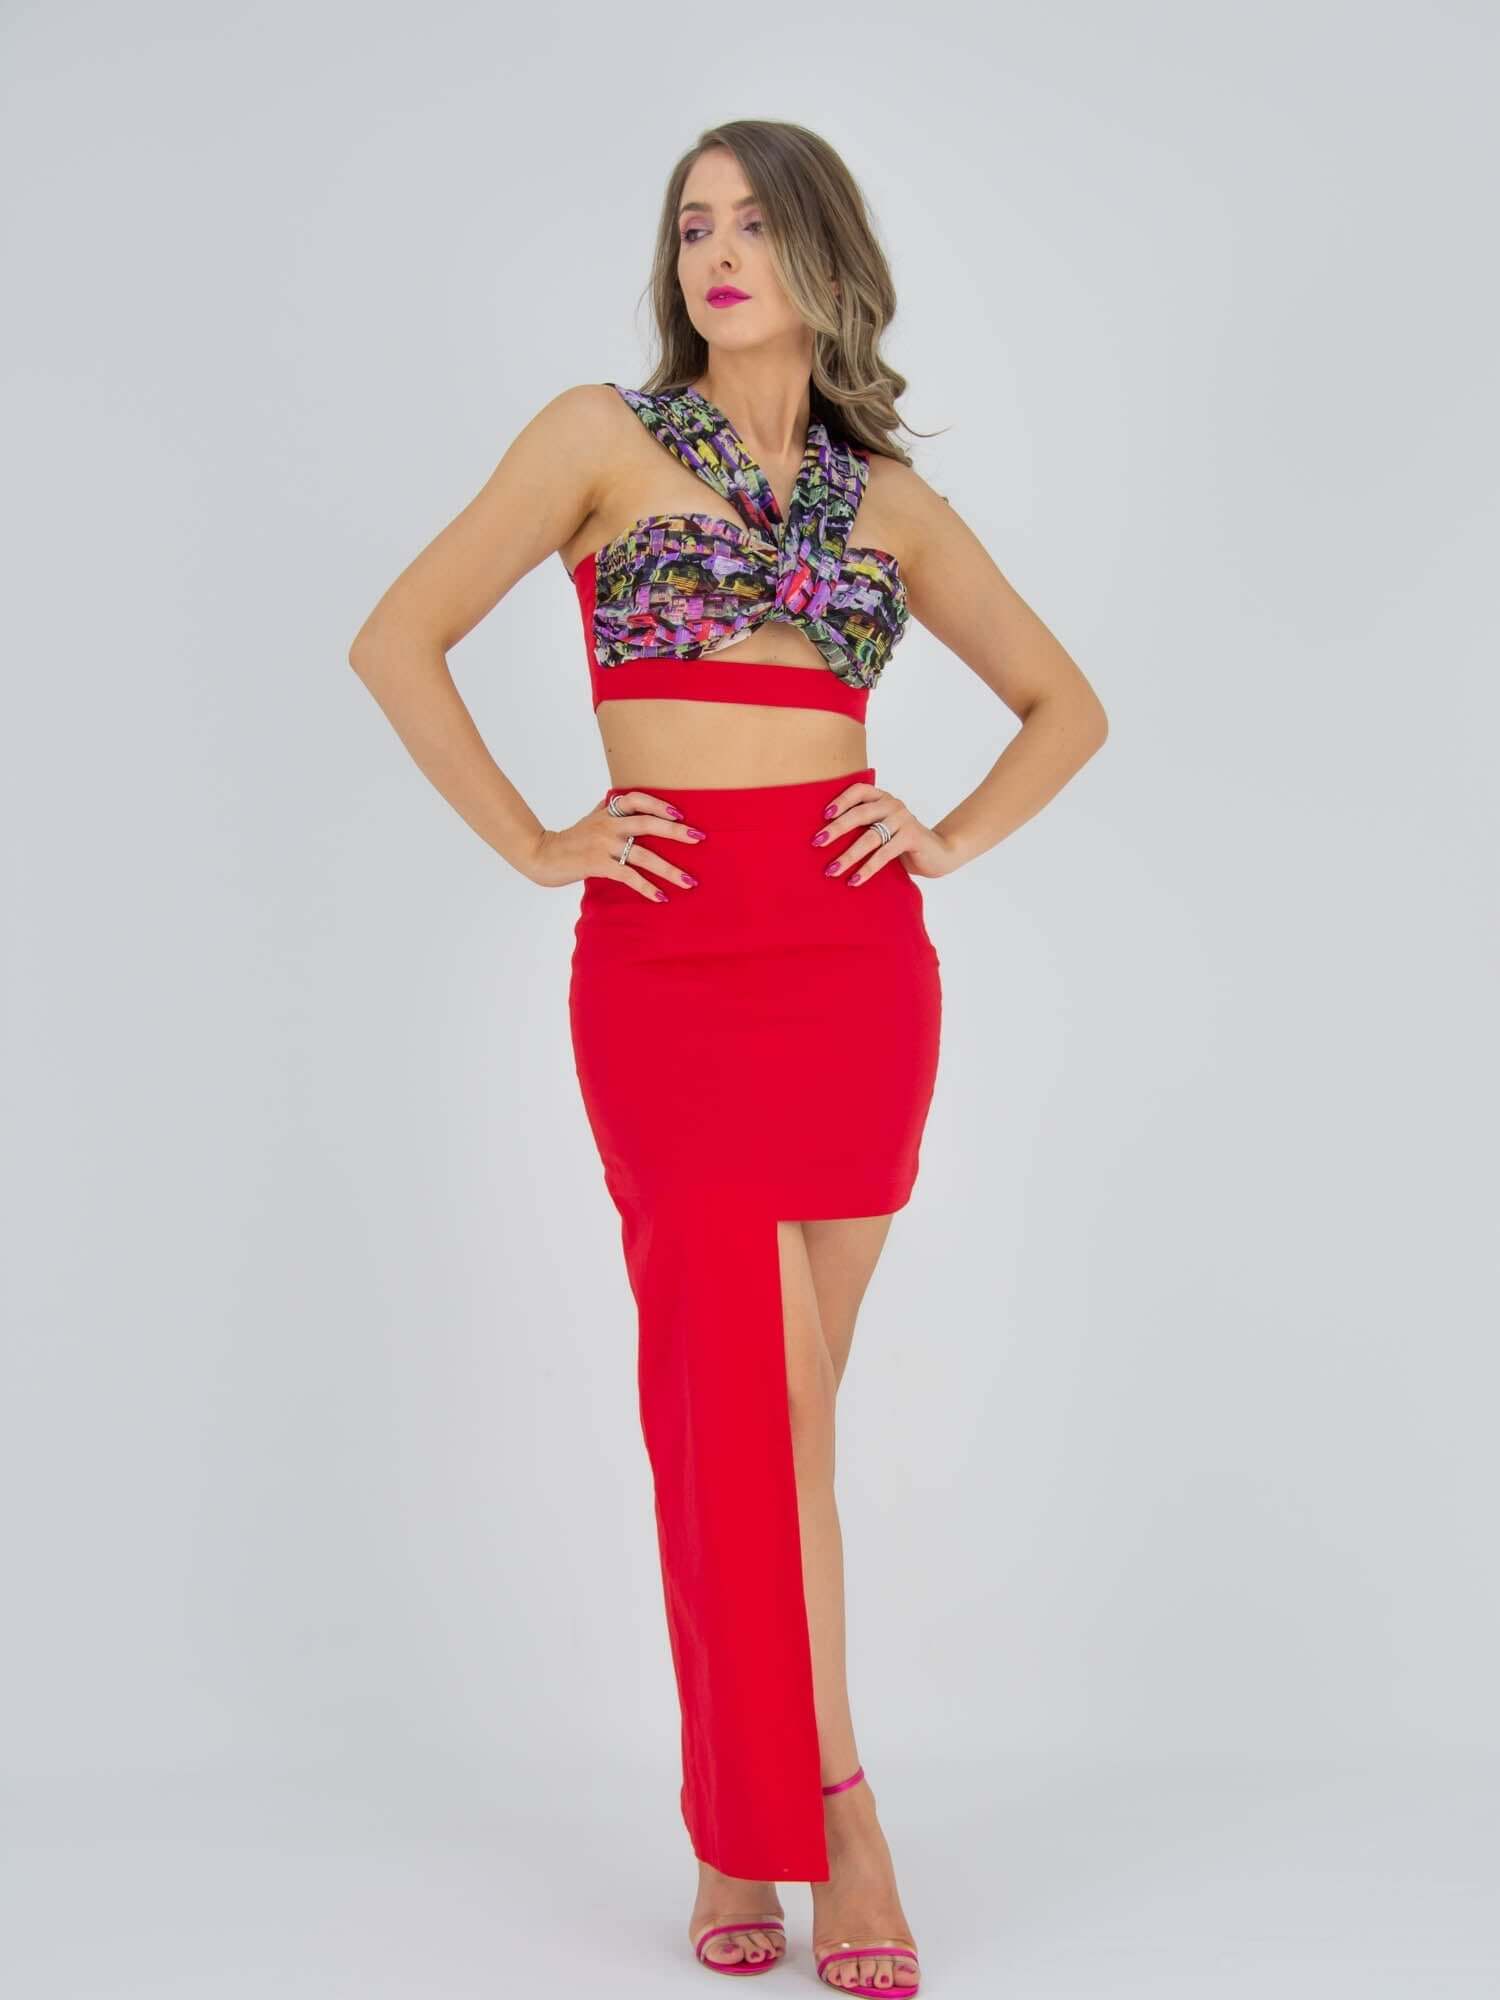 Super Elaborate Party Crop Top - Red by Tia Dorraine Women's Luxury Fashion Designer Clothing Brand